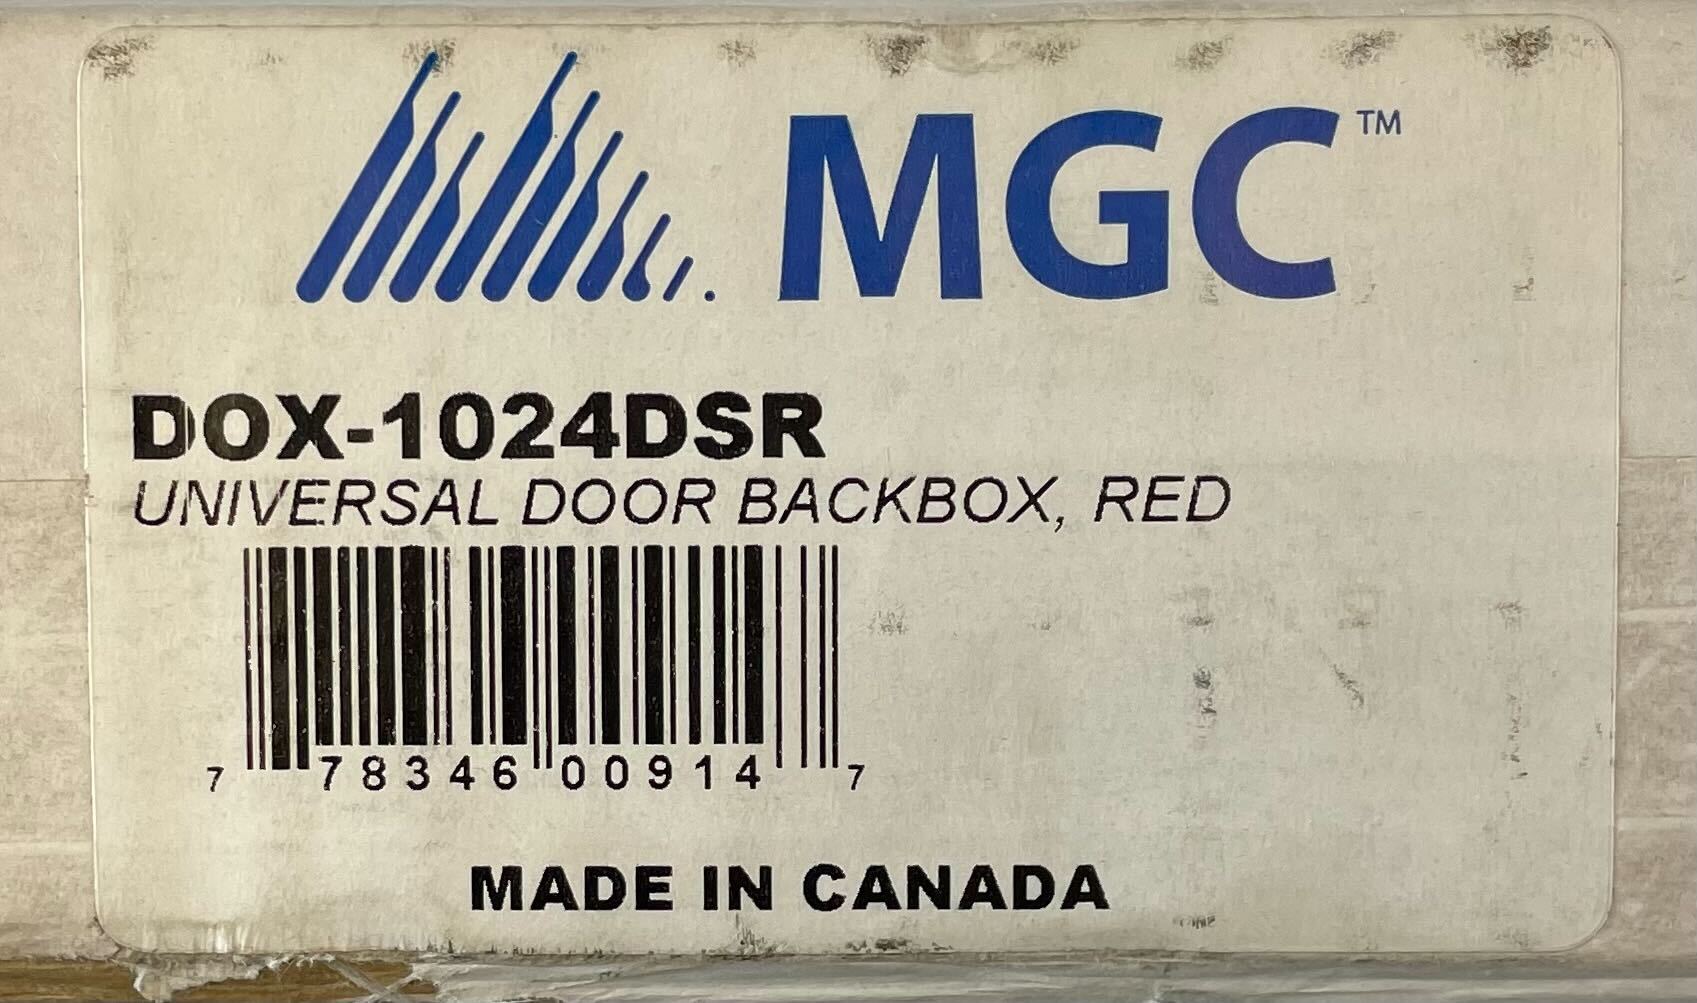 Mircom DOX-1024DSR Universal Door Backbox - The Fire Alarm Supplier